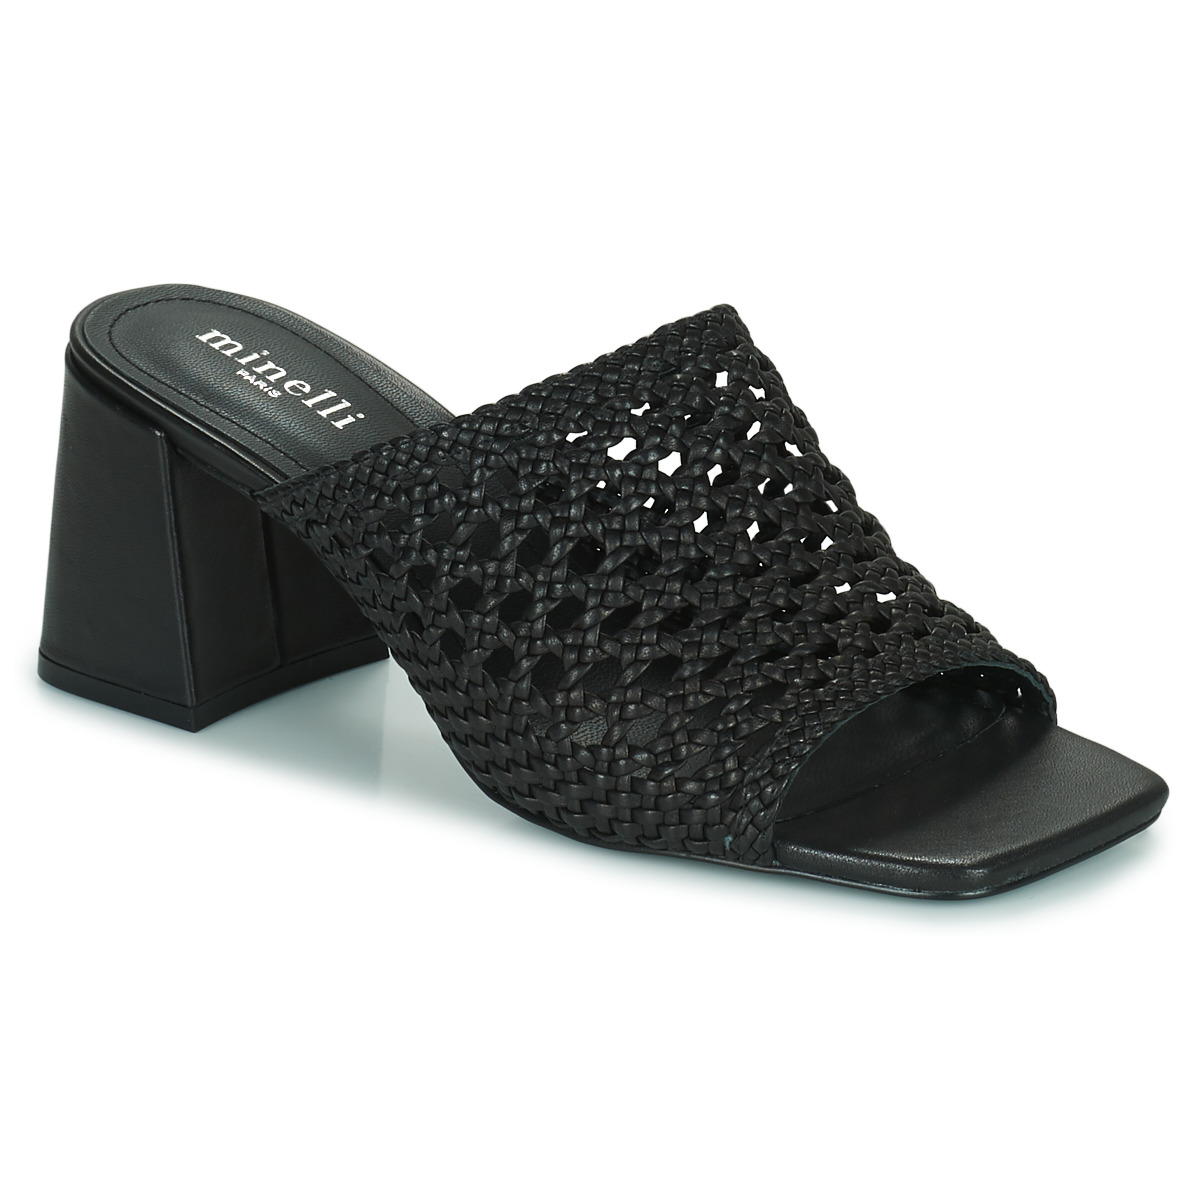 Zapatos Mujer Zuecos (Mules) Minelli SOLINE Negro